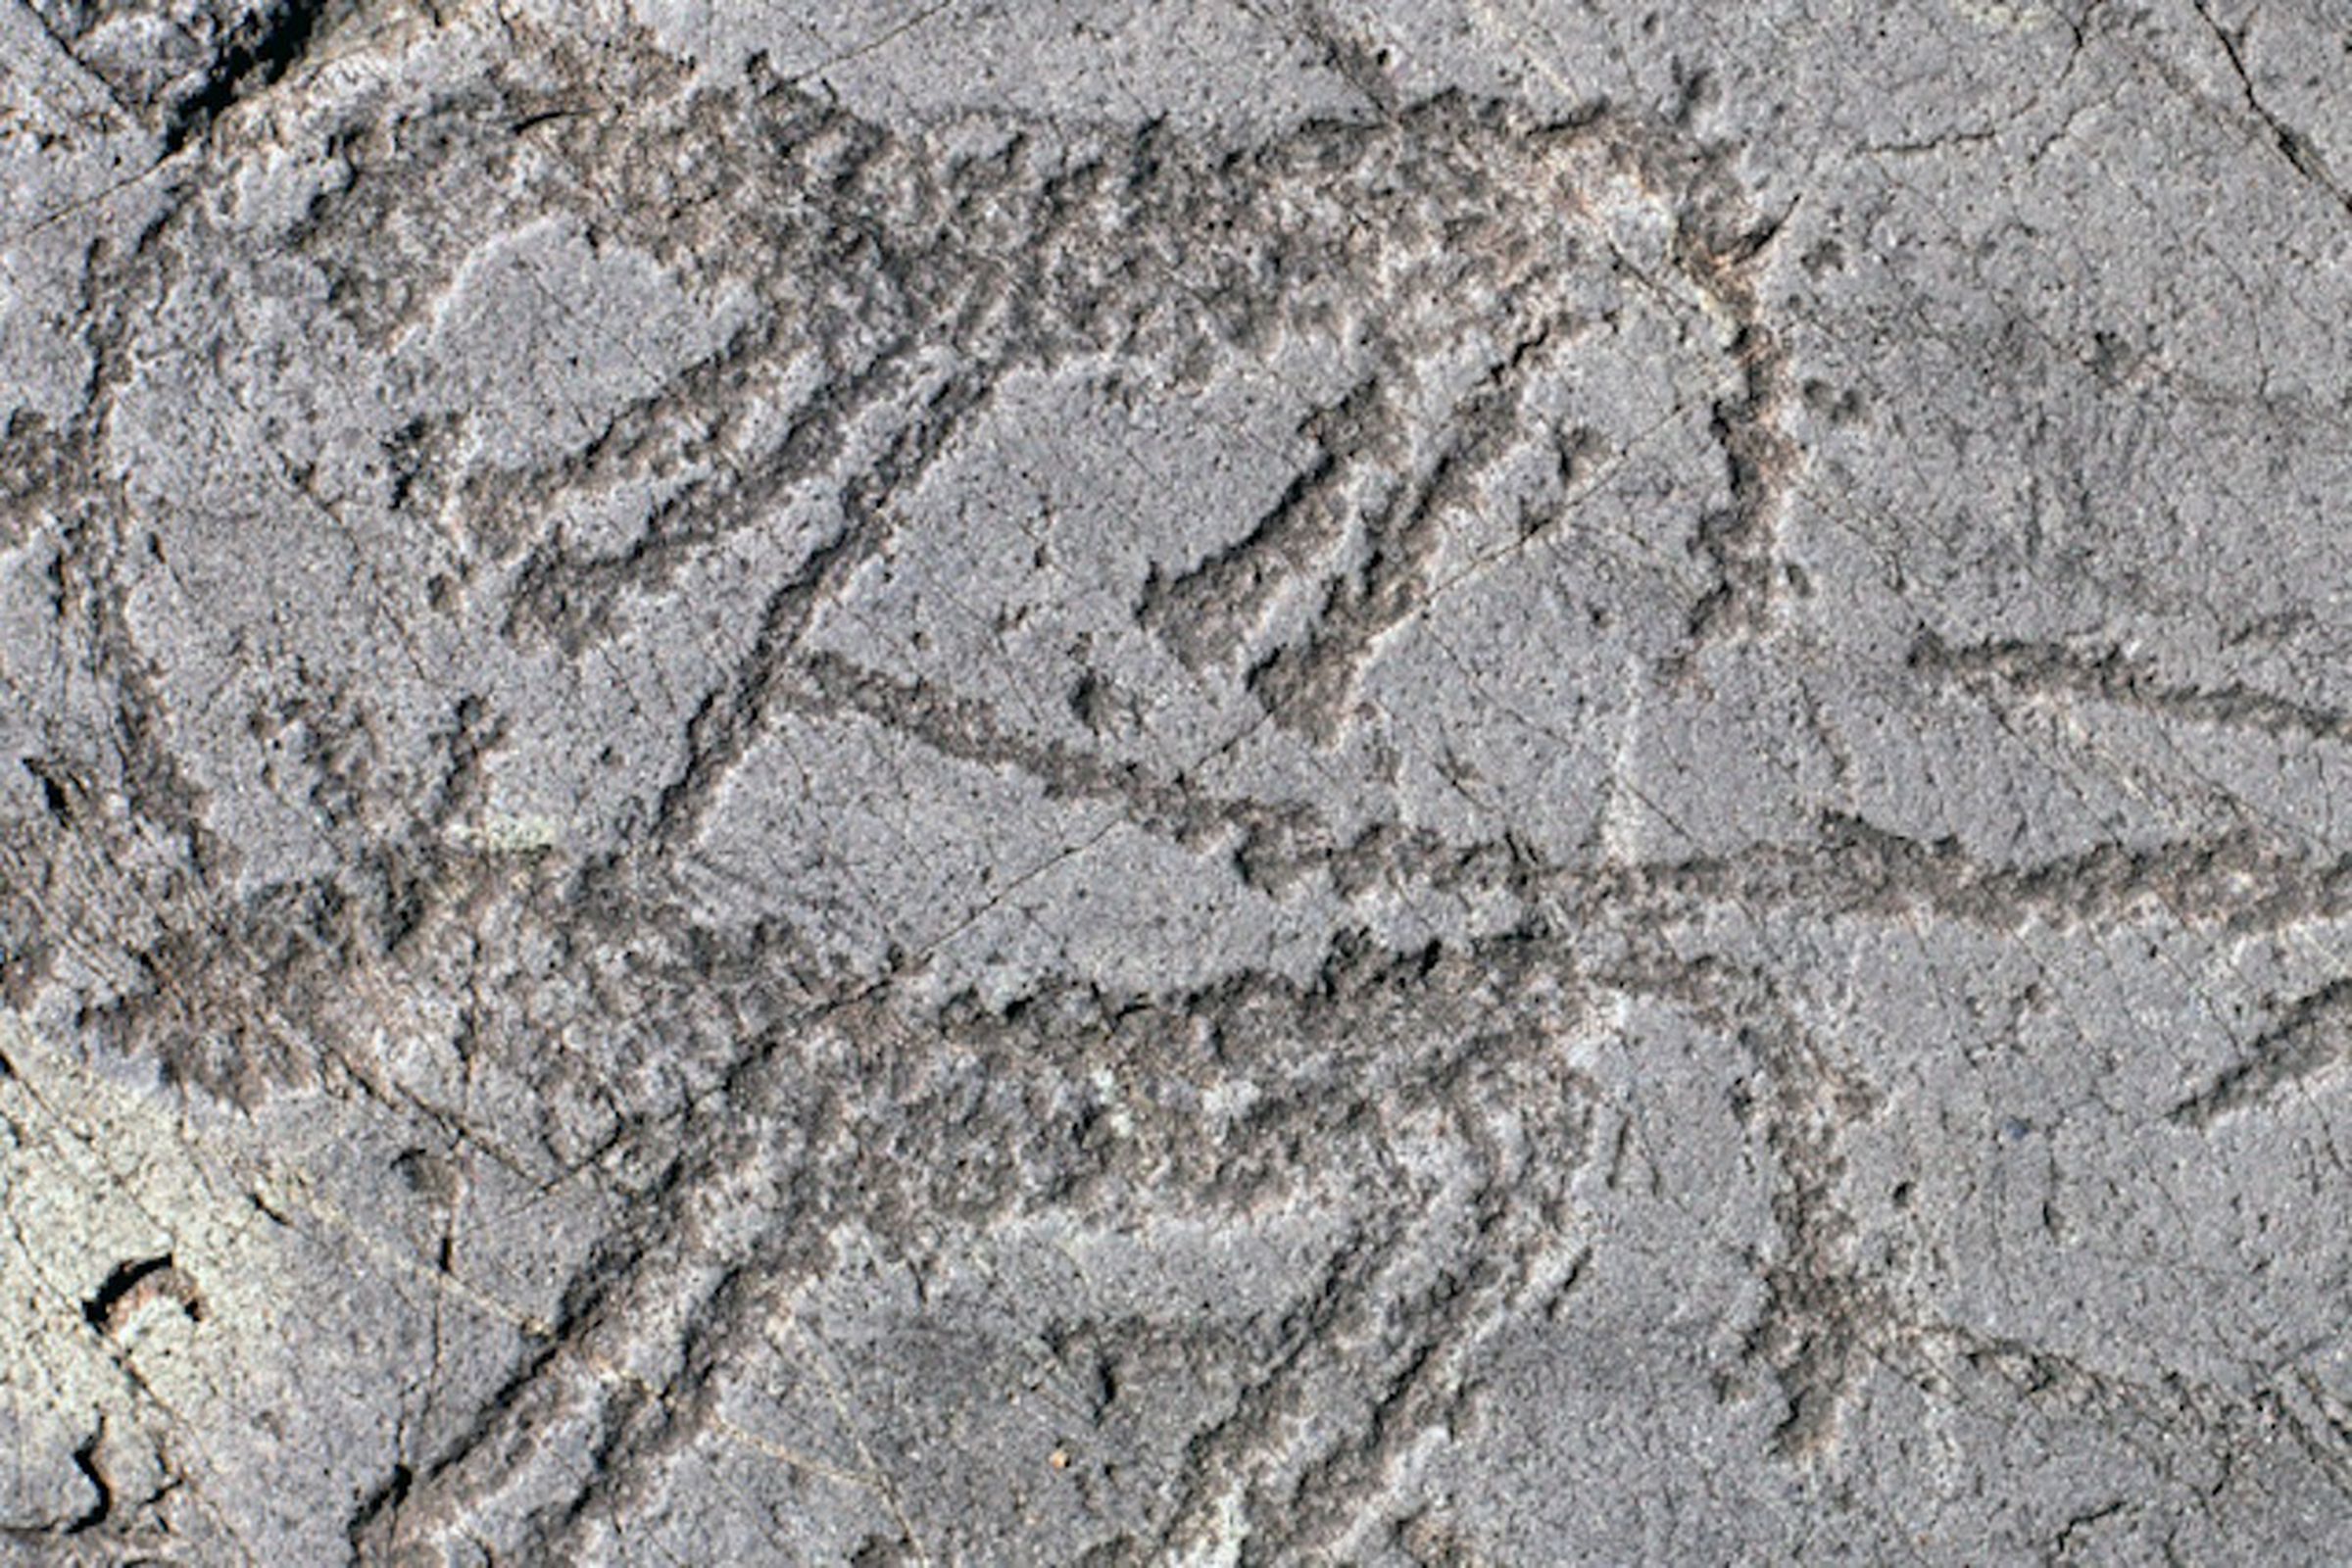 Prehistoric engravings in Italian Alps (Credit: Pitoti.org)